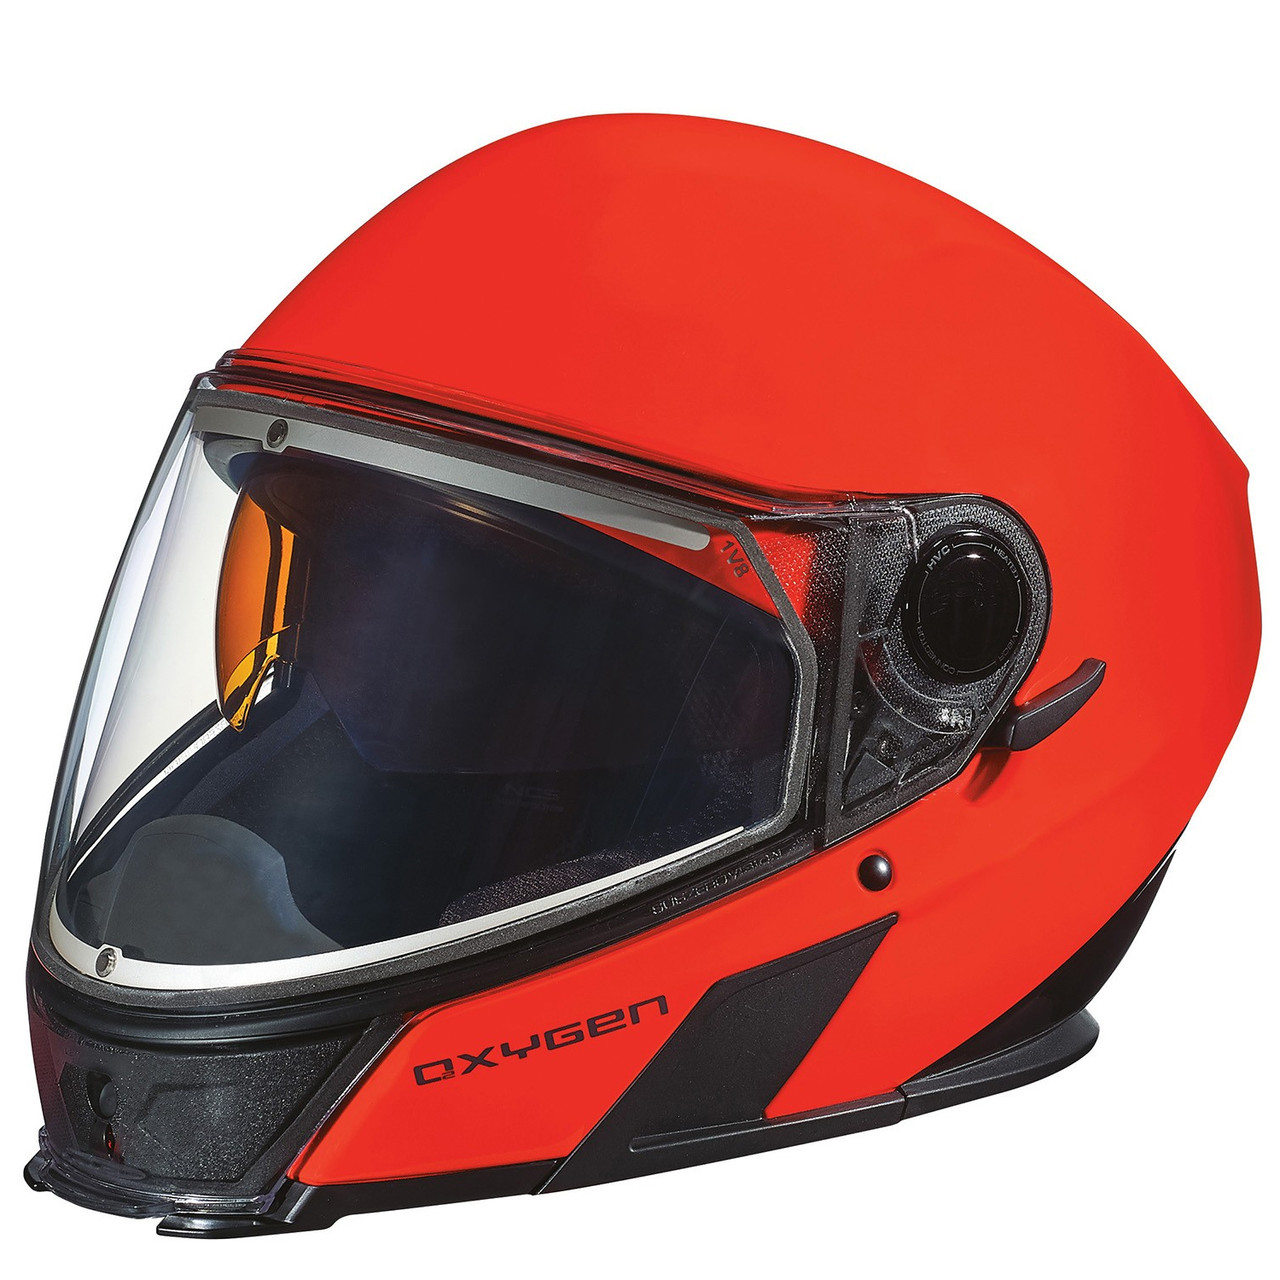 Ski-Doo New OEM Heated OXYGEN Helmet, Men's/Unisex X-Small, 9290190212